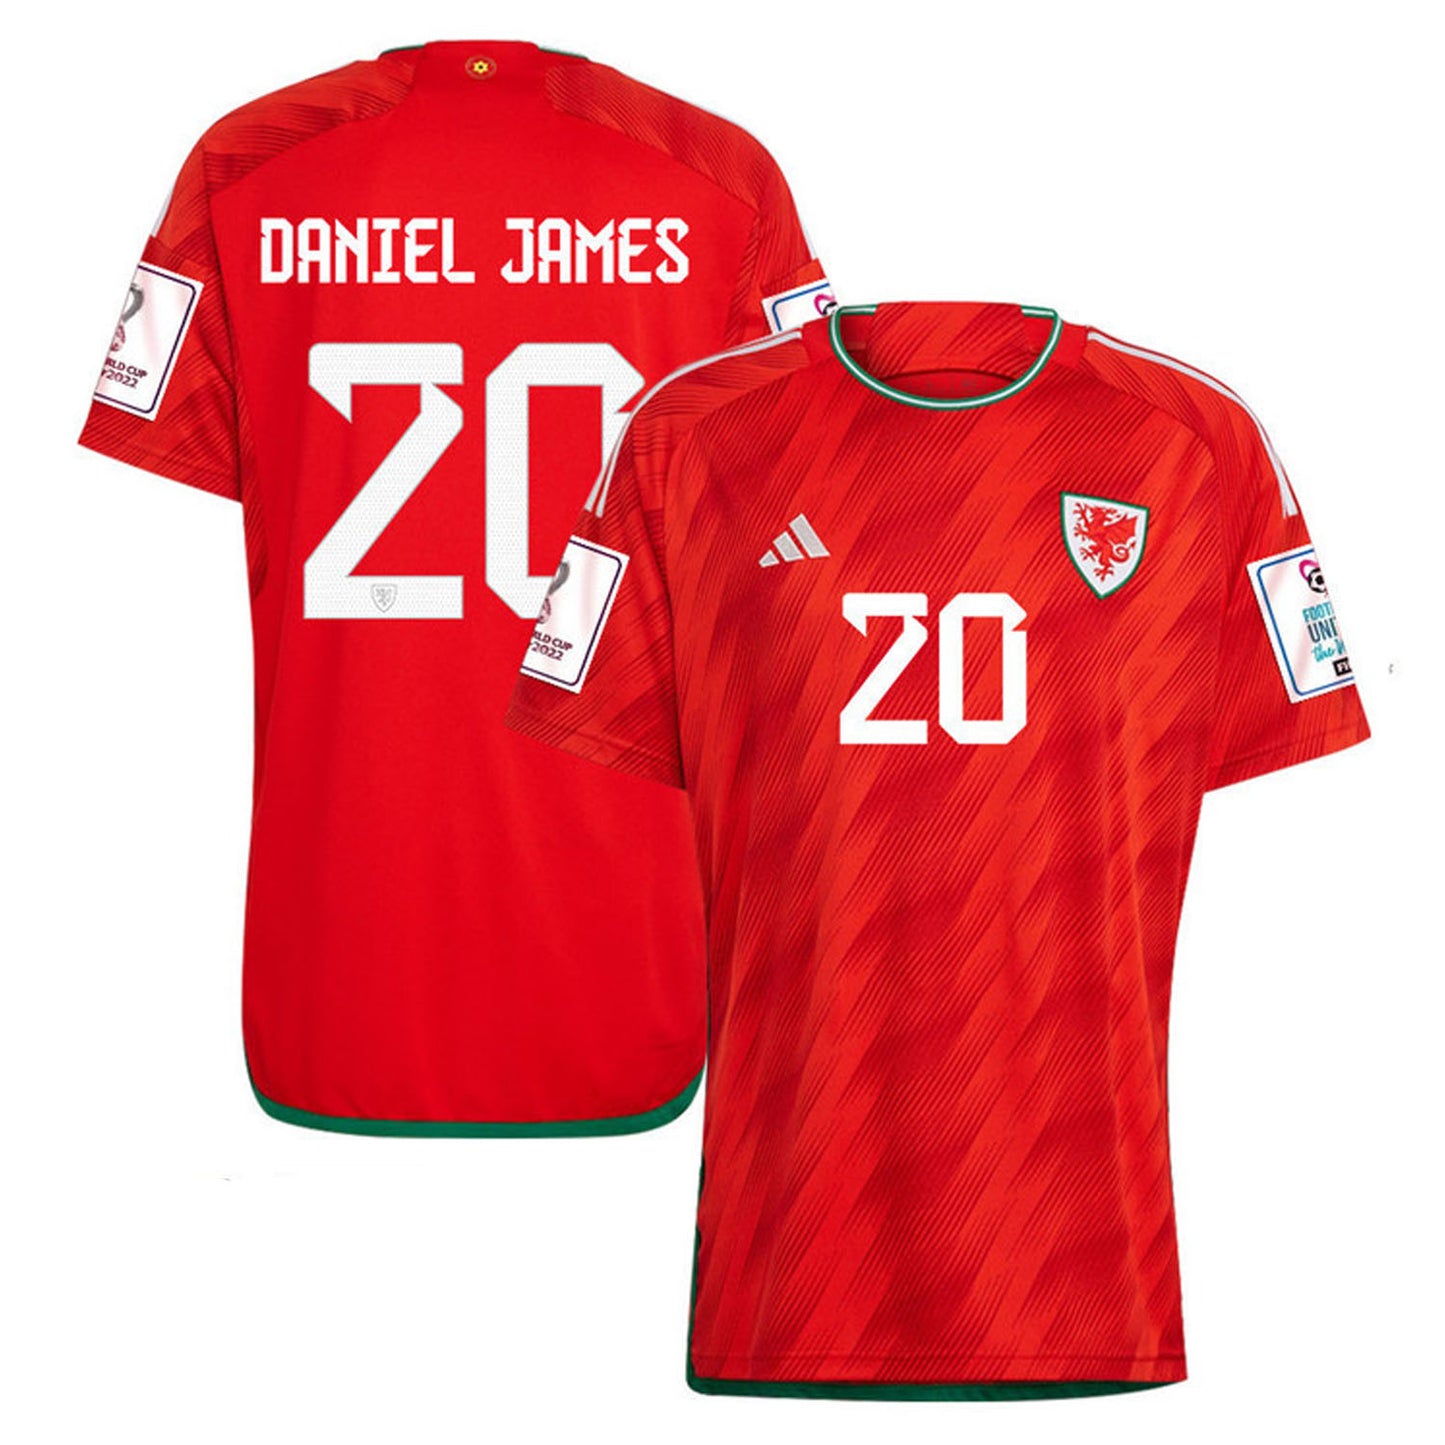 Daniel James Wales 20 Fifa World Cup Jersey